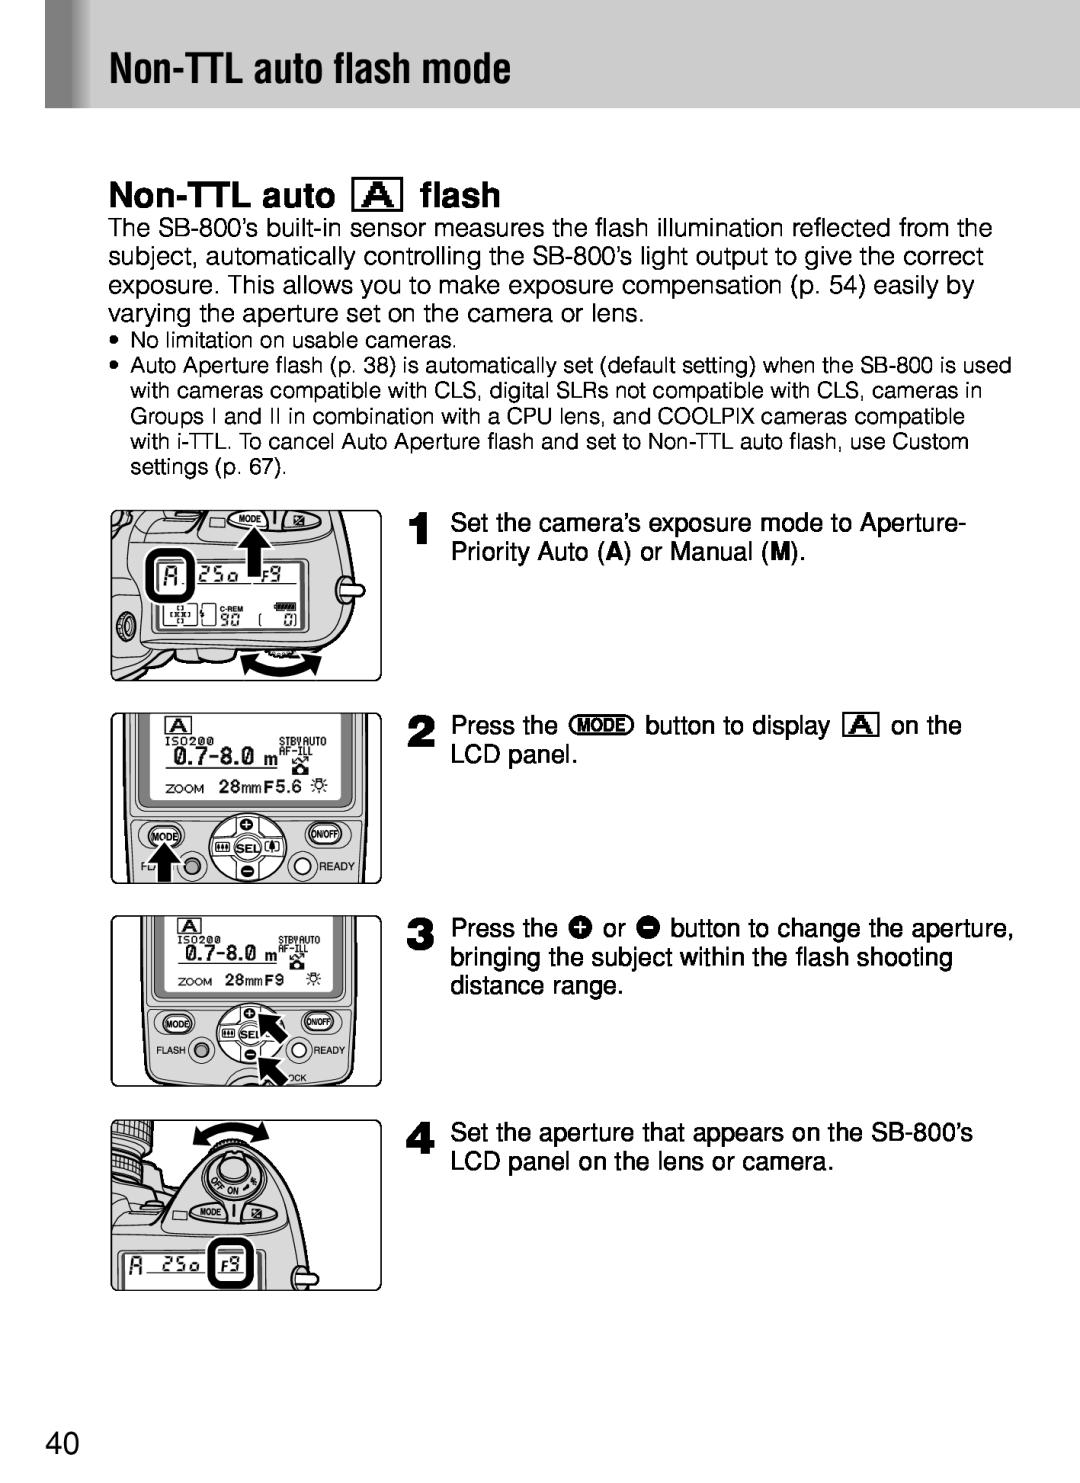 Nikon SB-800 instruction manual Non-TTL auto flash mode, Non-TTL auto A flash 